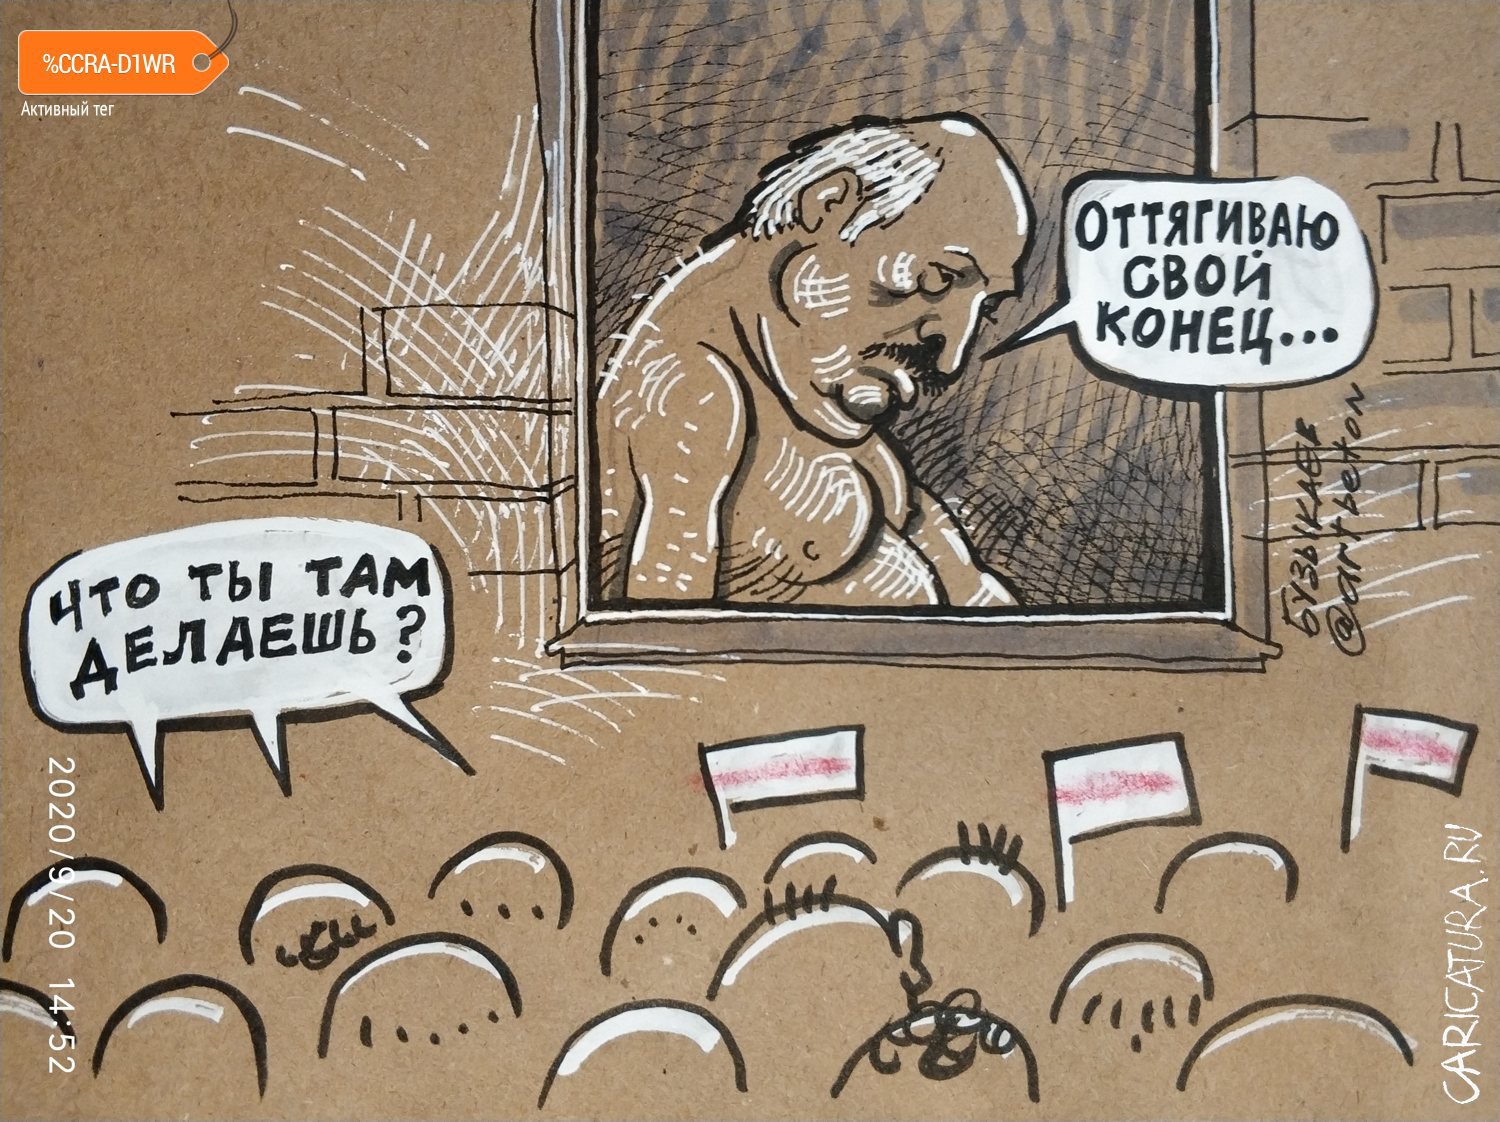 Карикатура "Что там делаешь?", Камиль Бузыкаев